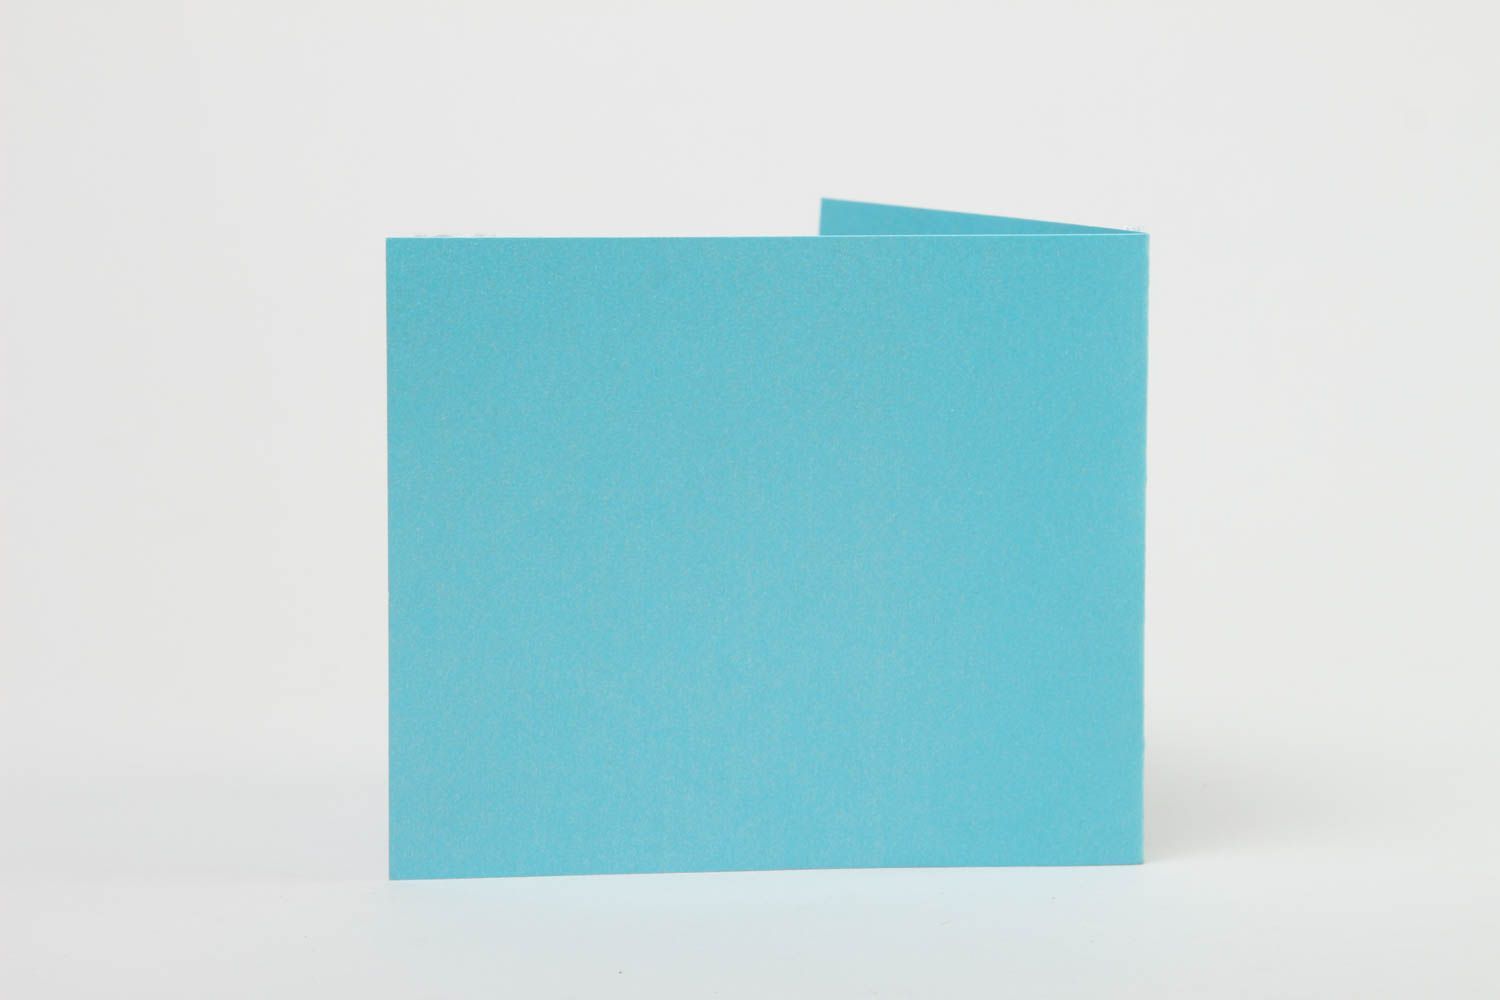 Handmade schöne Grußkarten Scrapbook Karten Grußkarten Papier kindlich hellblau foto 4